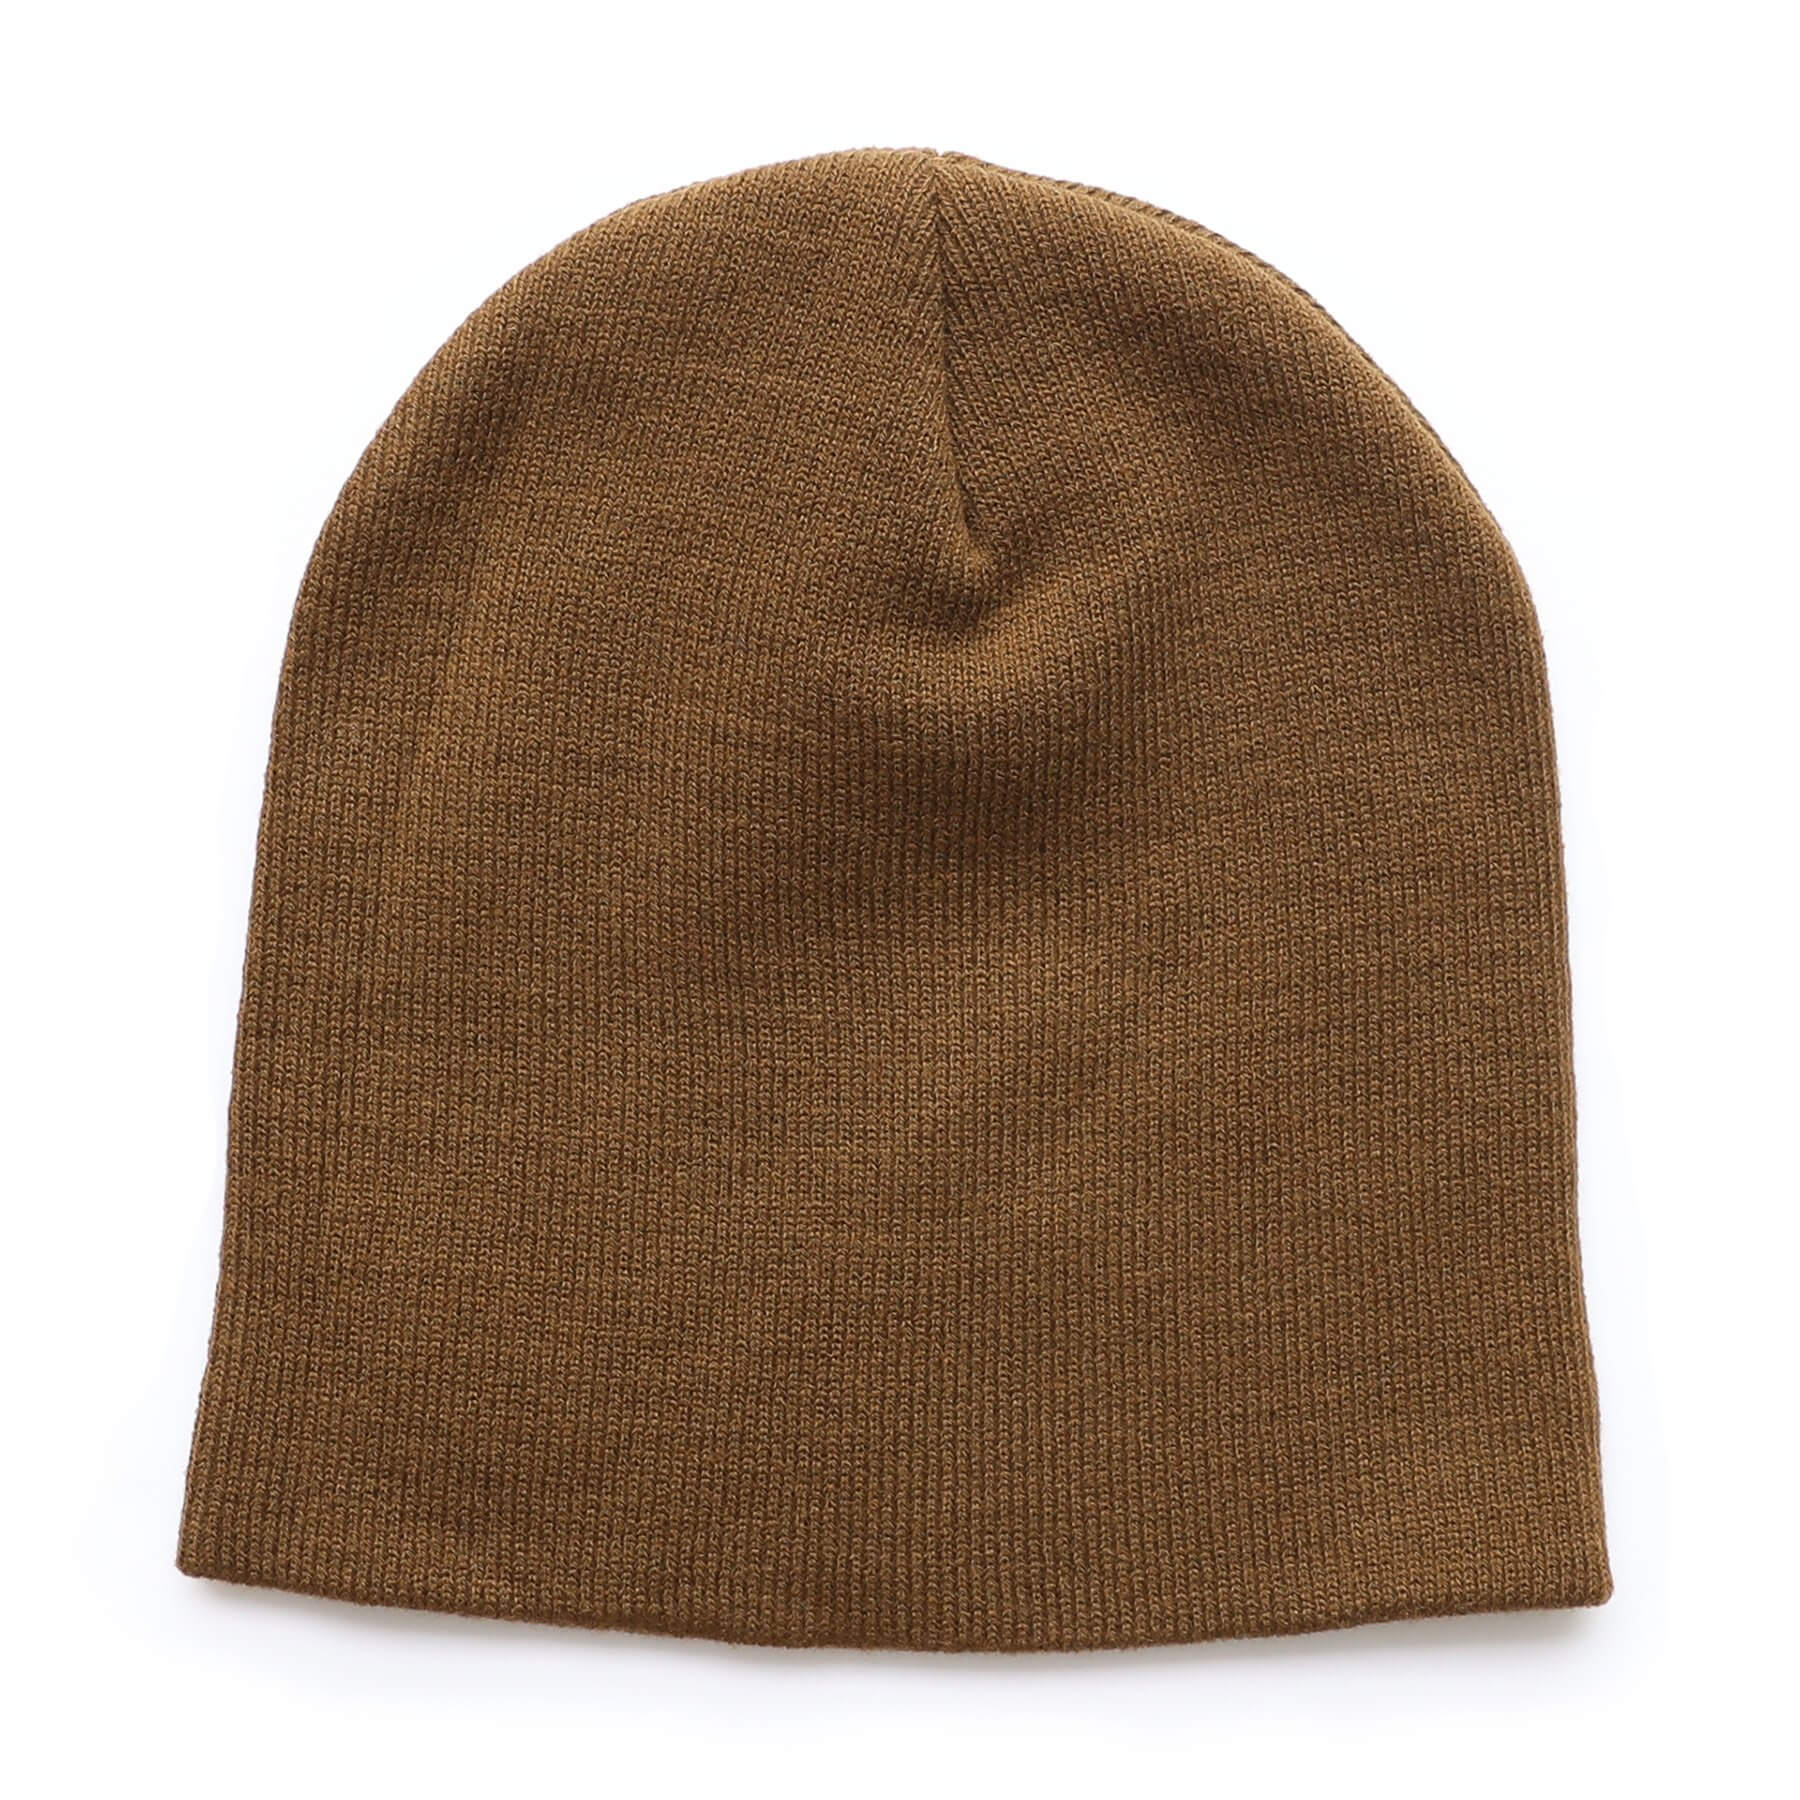 Dubinik casual knitted cotton cap #2014